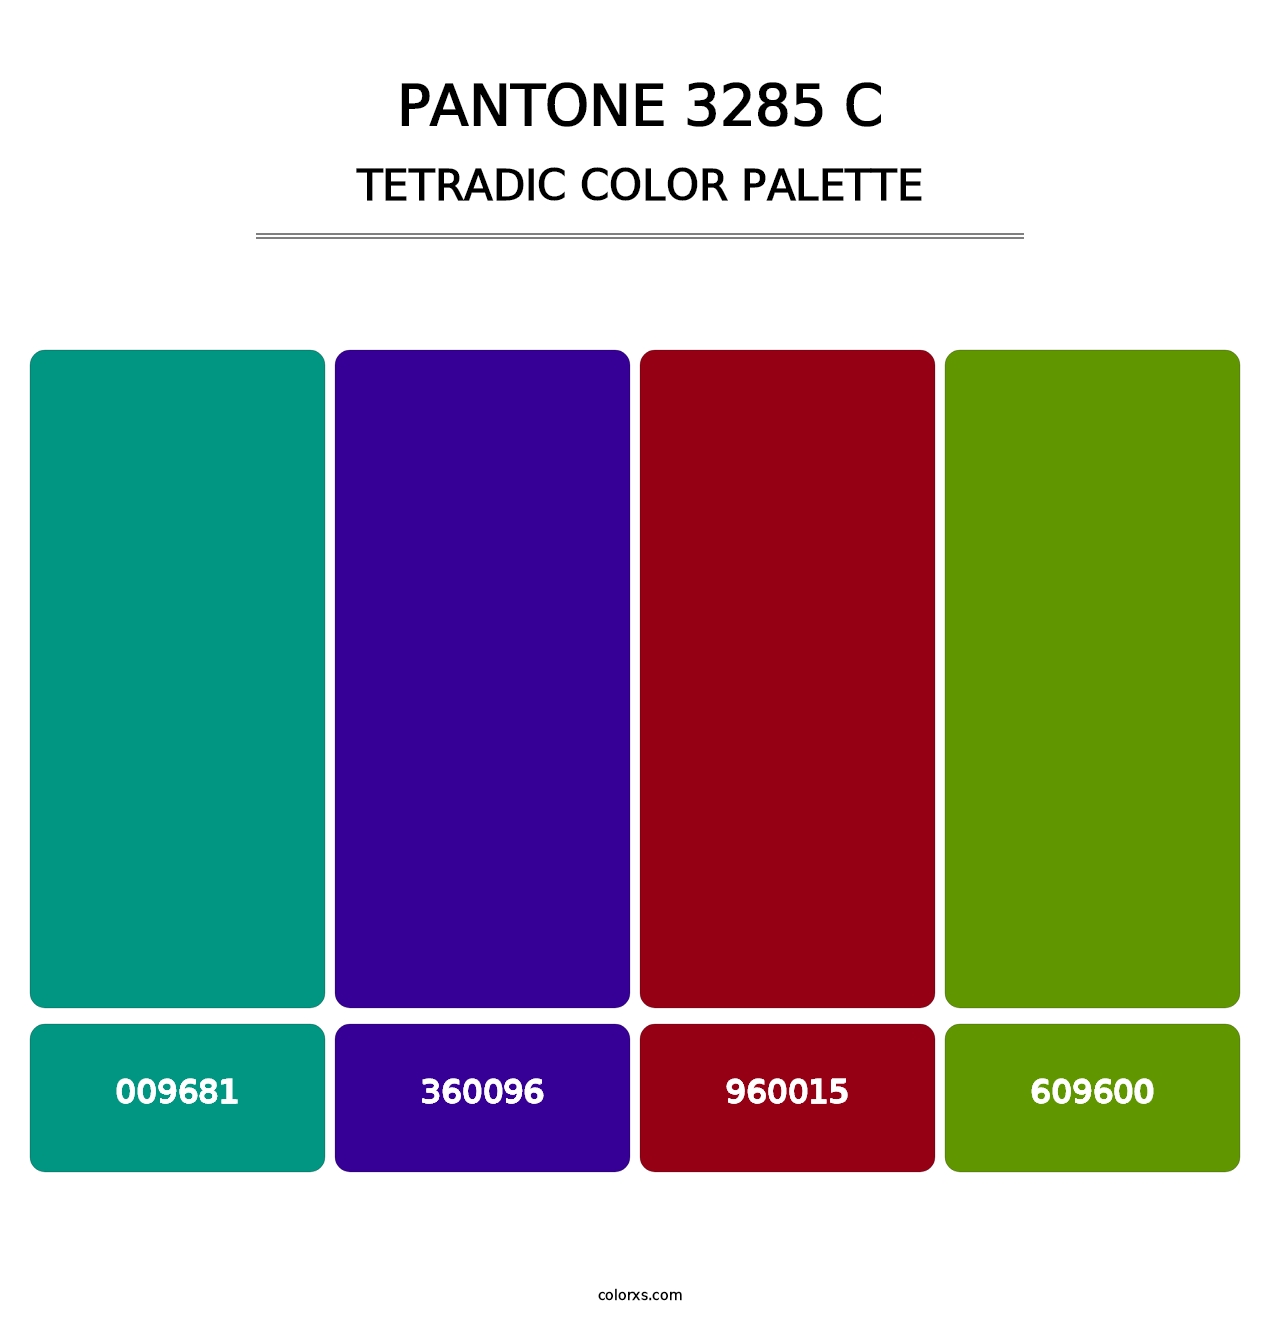 PANTONE 3285 C - Tetradic Color Palette